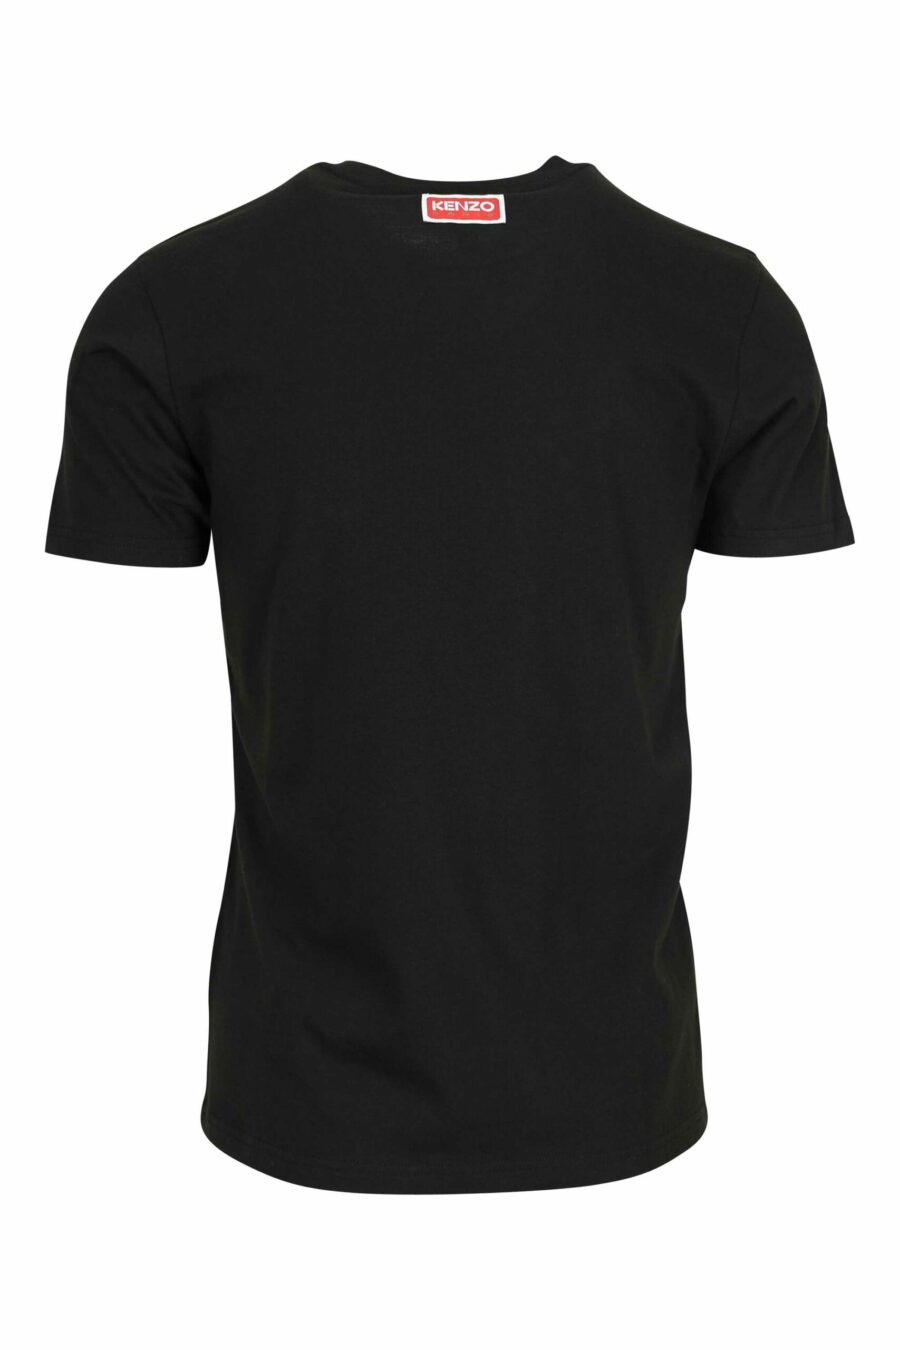 T-shirt noir "slim" avec logo tigre mini - 3612230625020 1 échelle